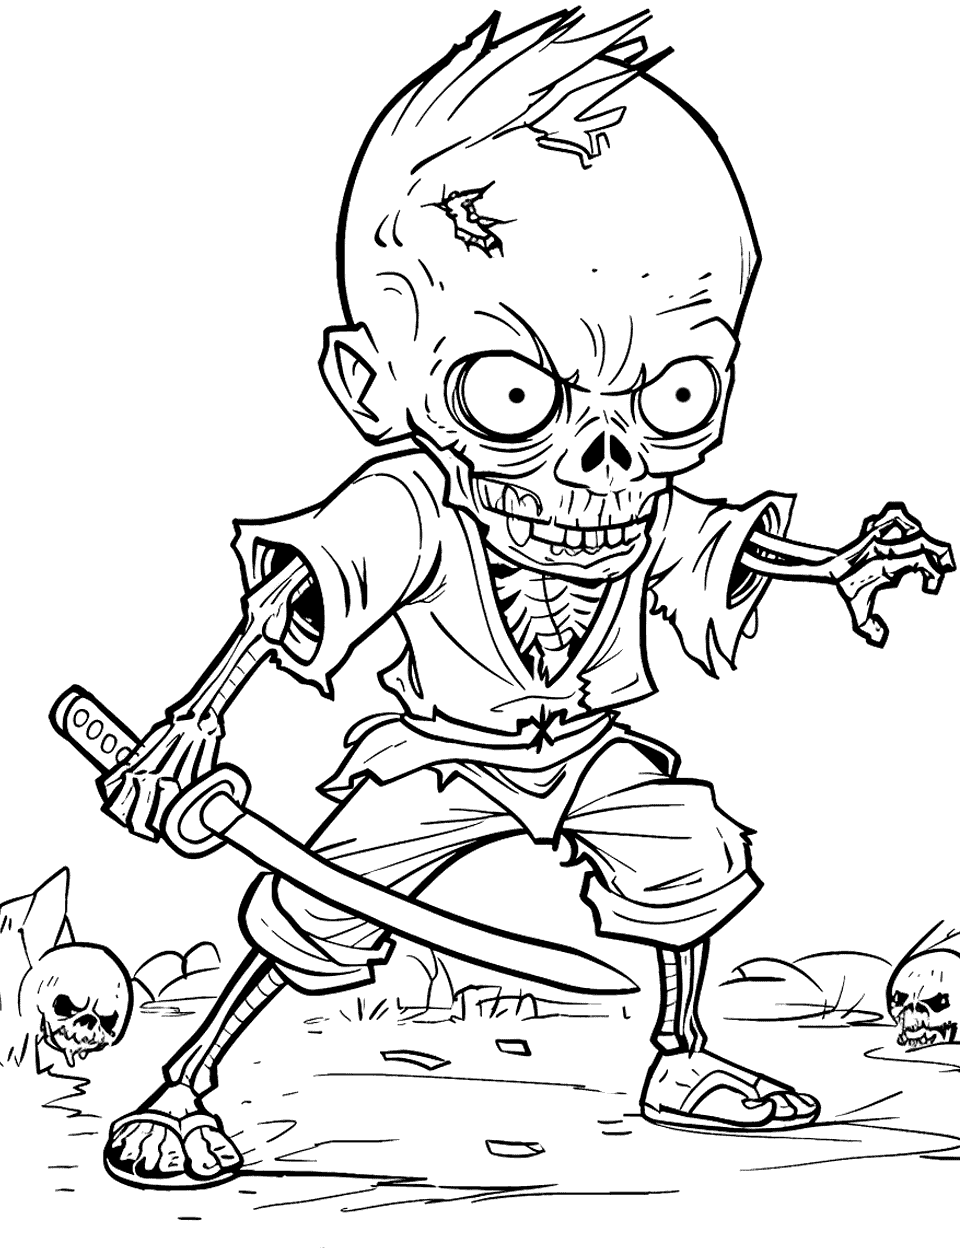 Saifu the Zombie Warrior Coloring Page - A fictional zombie named Saifu, armed with katana ready for battle.